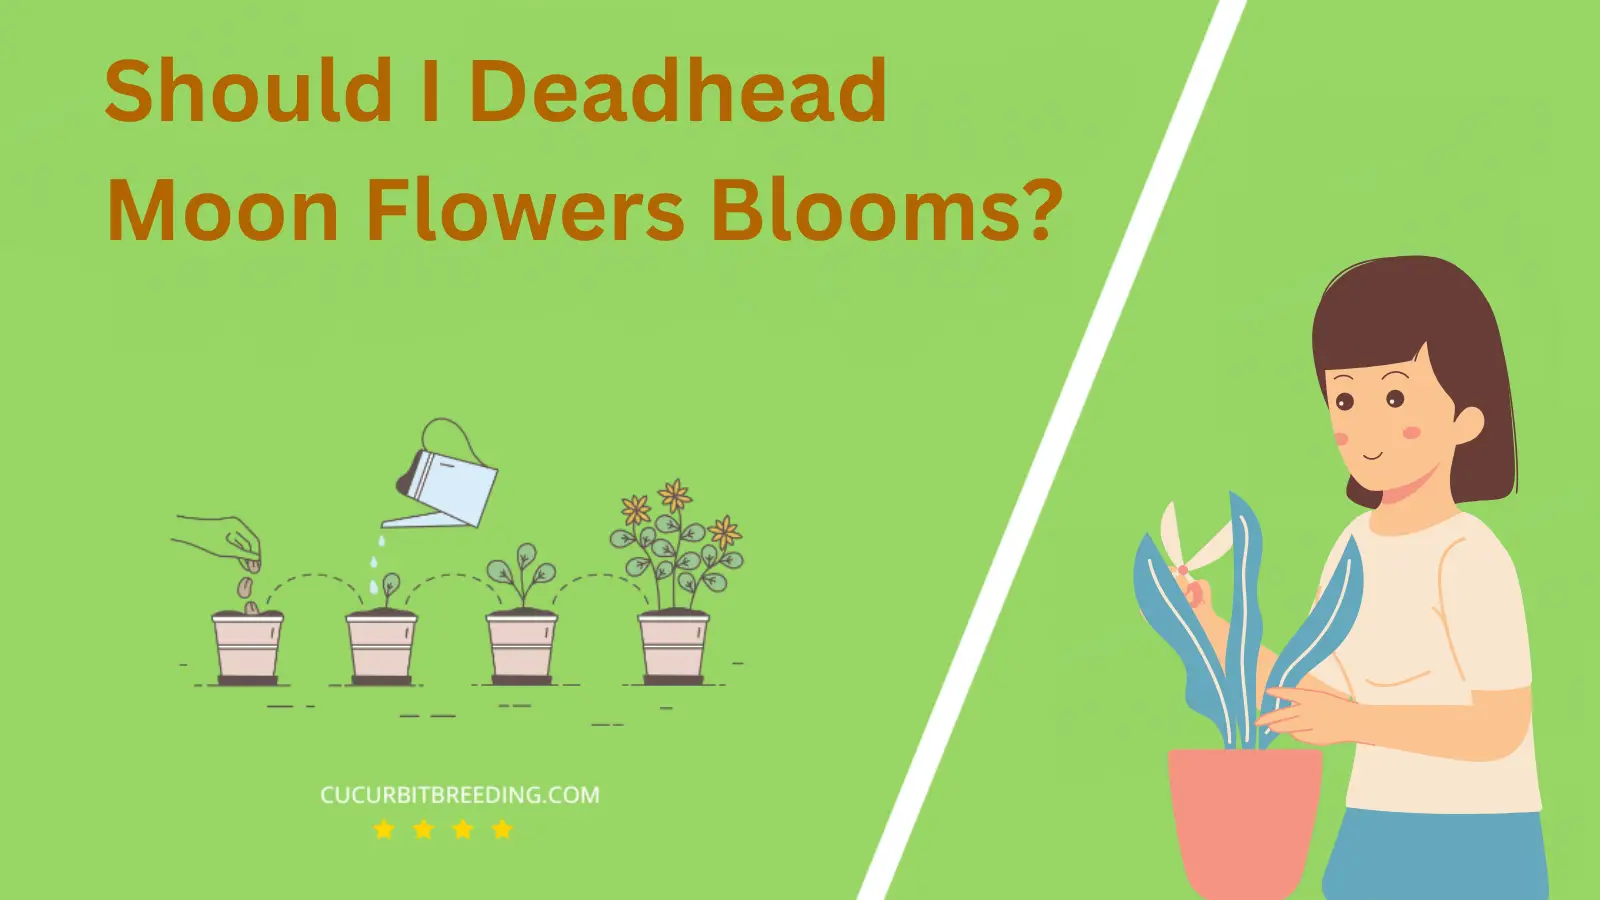 Should I Deadhead Moon Flowers Blooms?